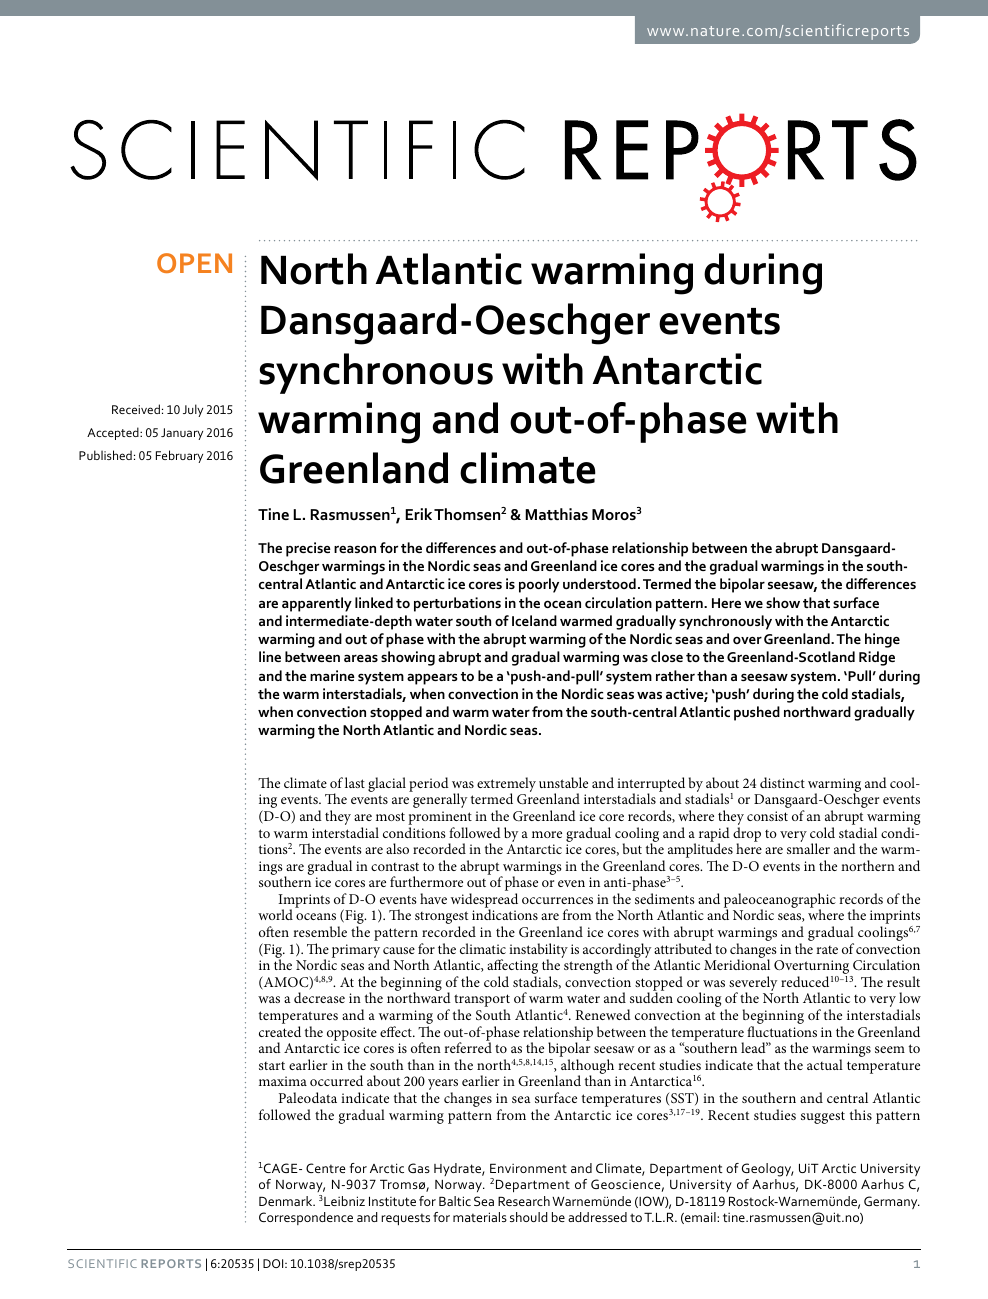 North Atlantic Warming During Dansgaard Oeschger Events